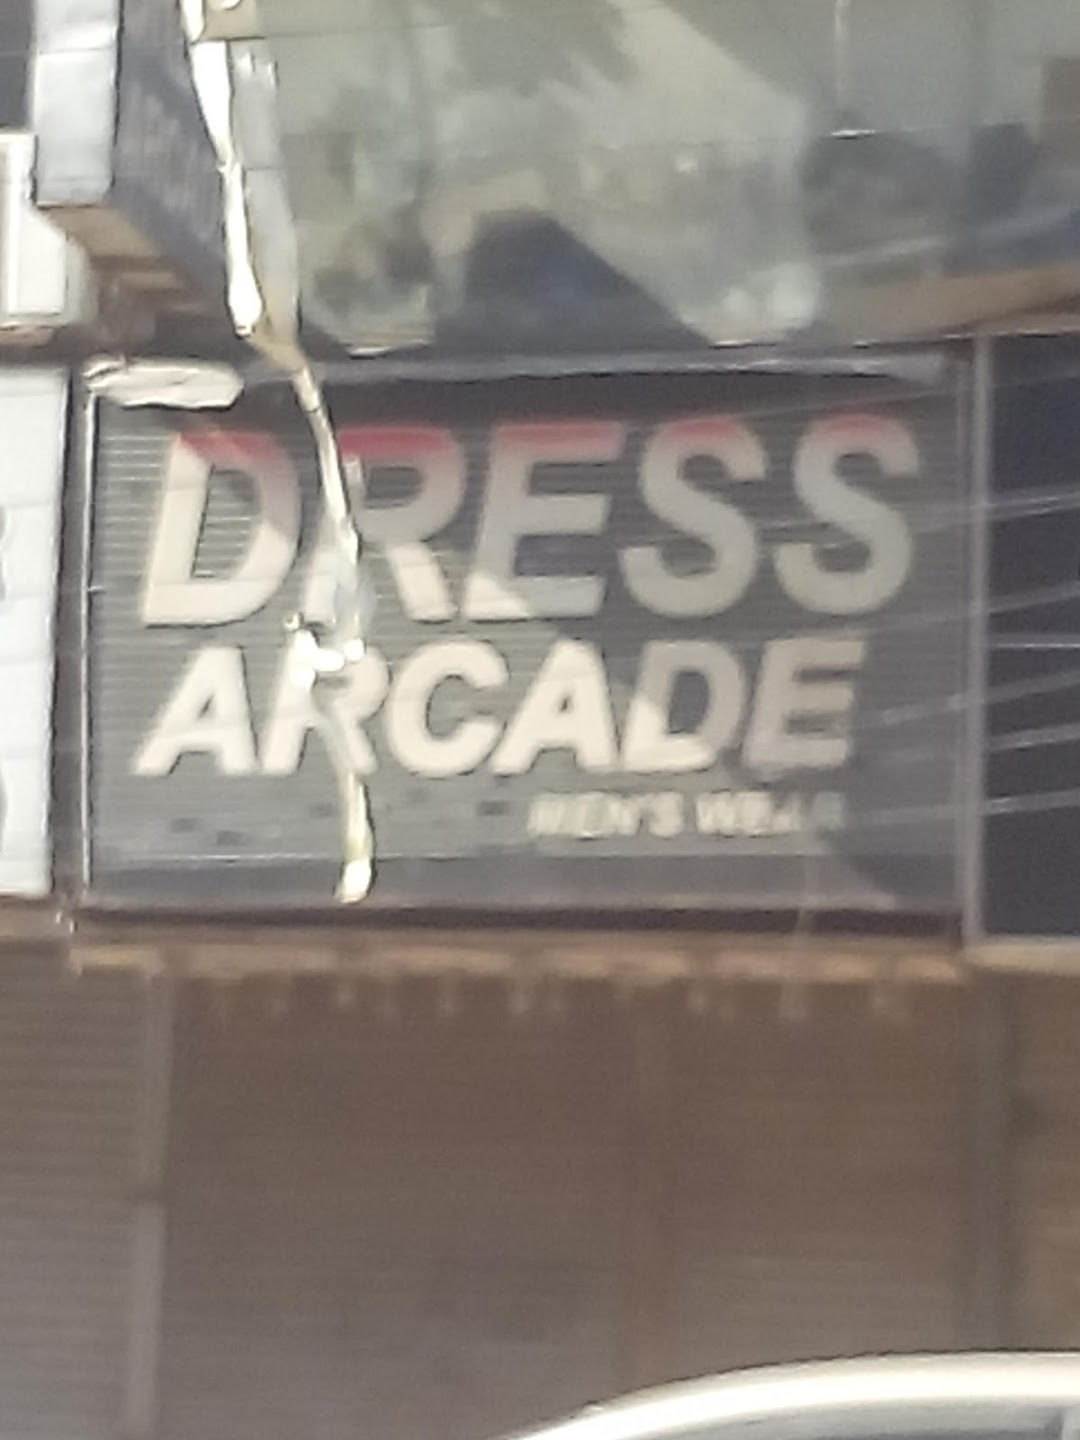 Dress Arcade